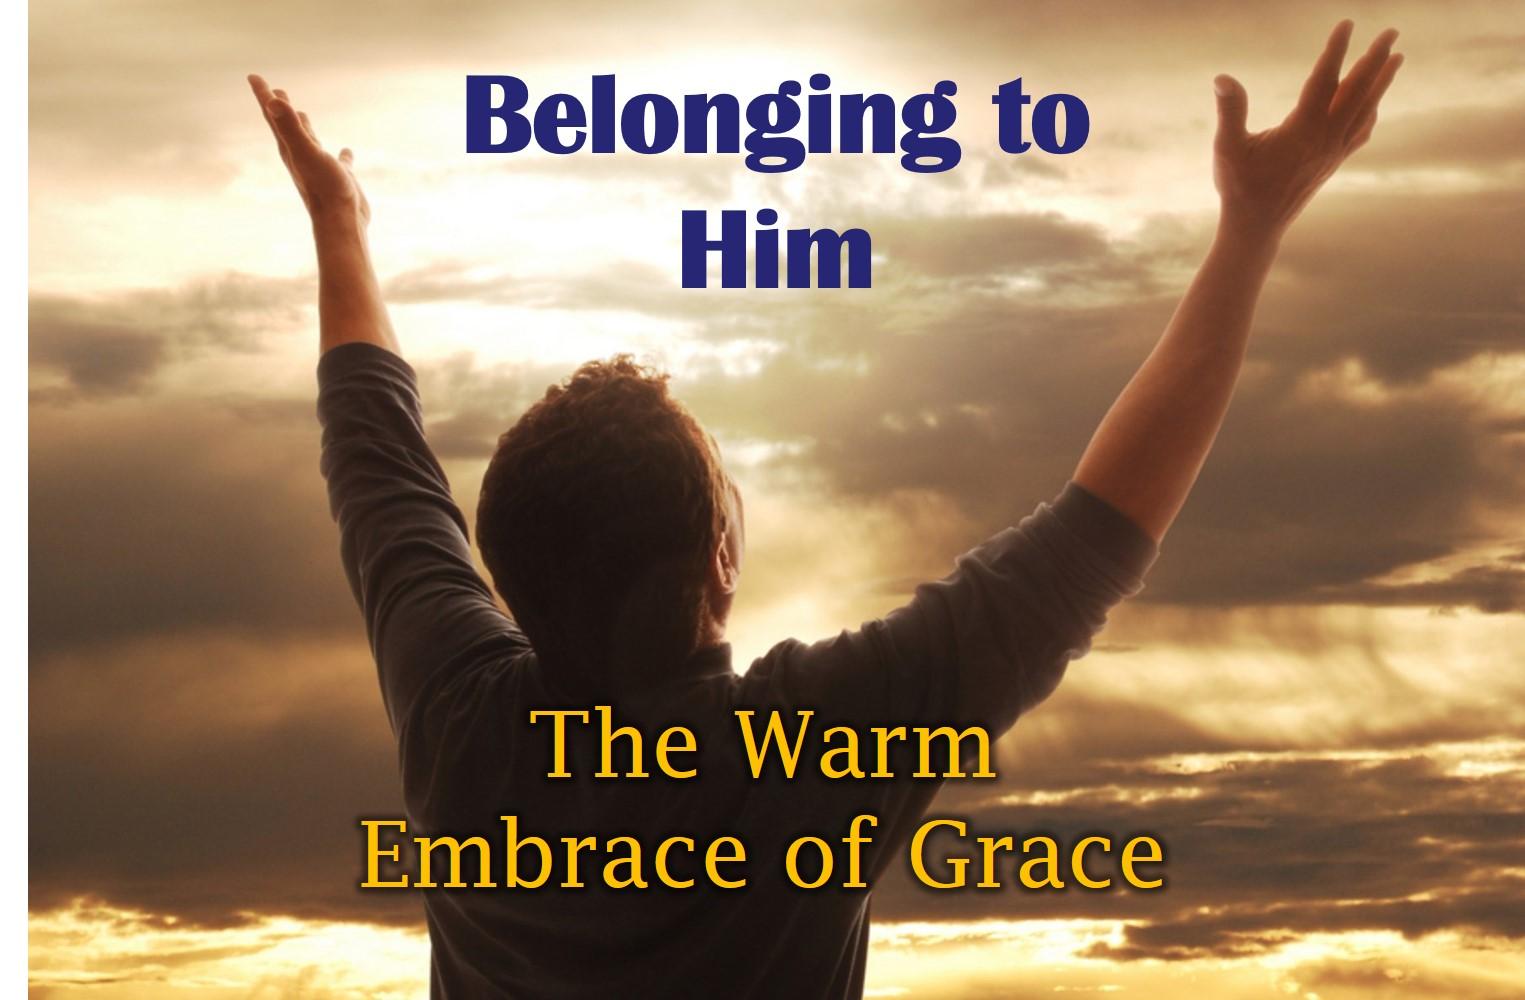 The Warm Embrace of Grace